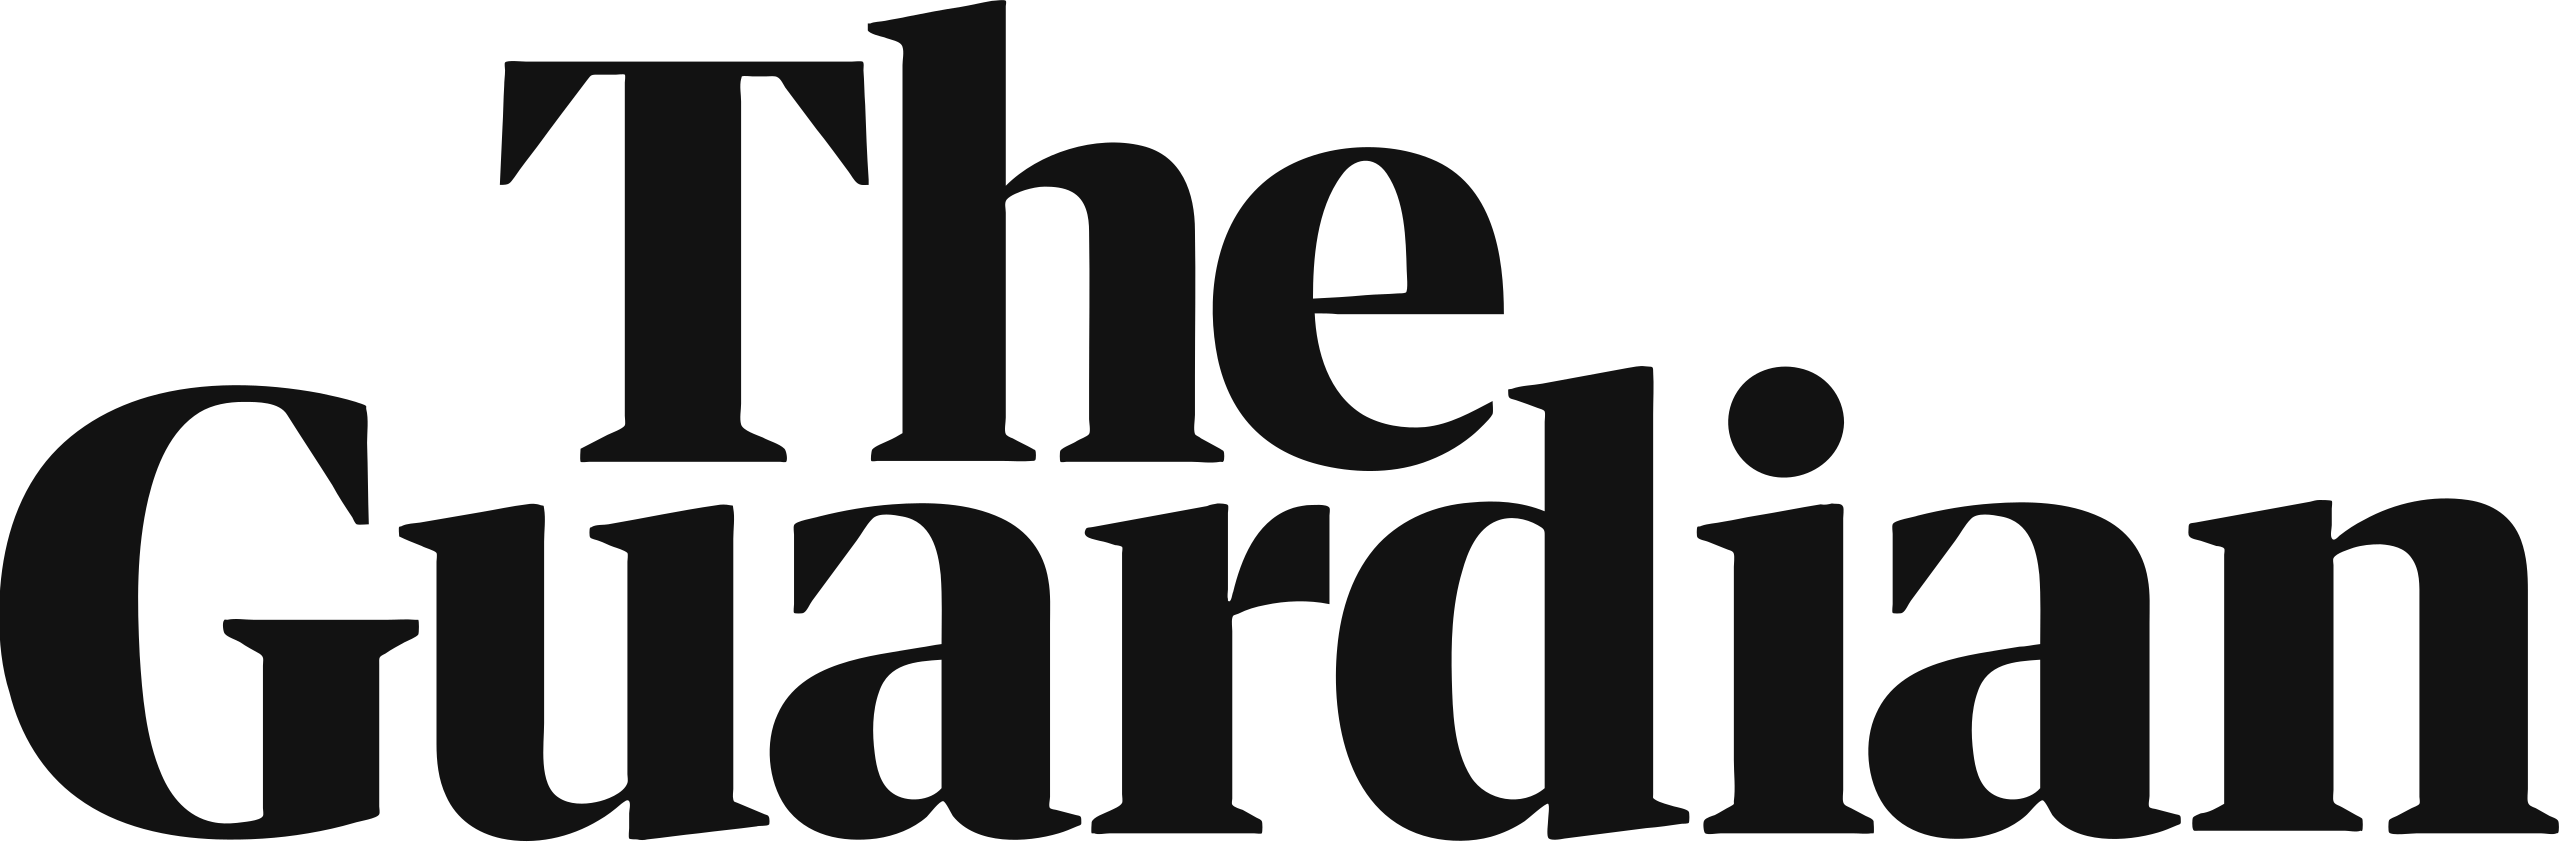 The Guardian logo in black